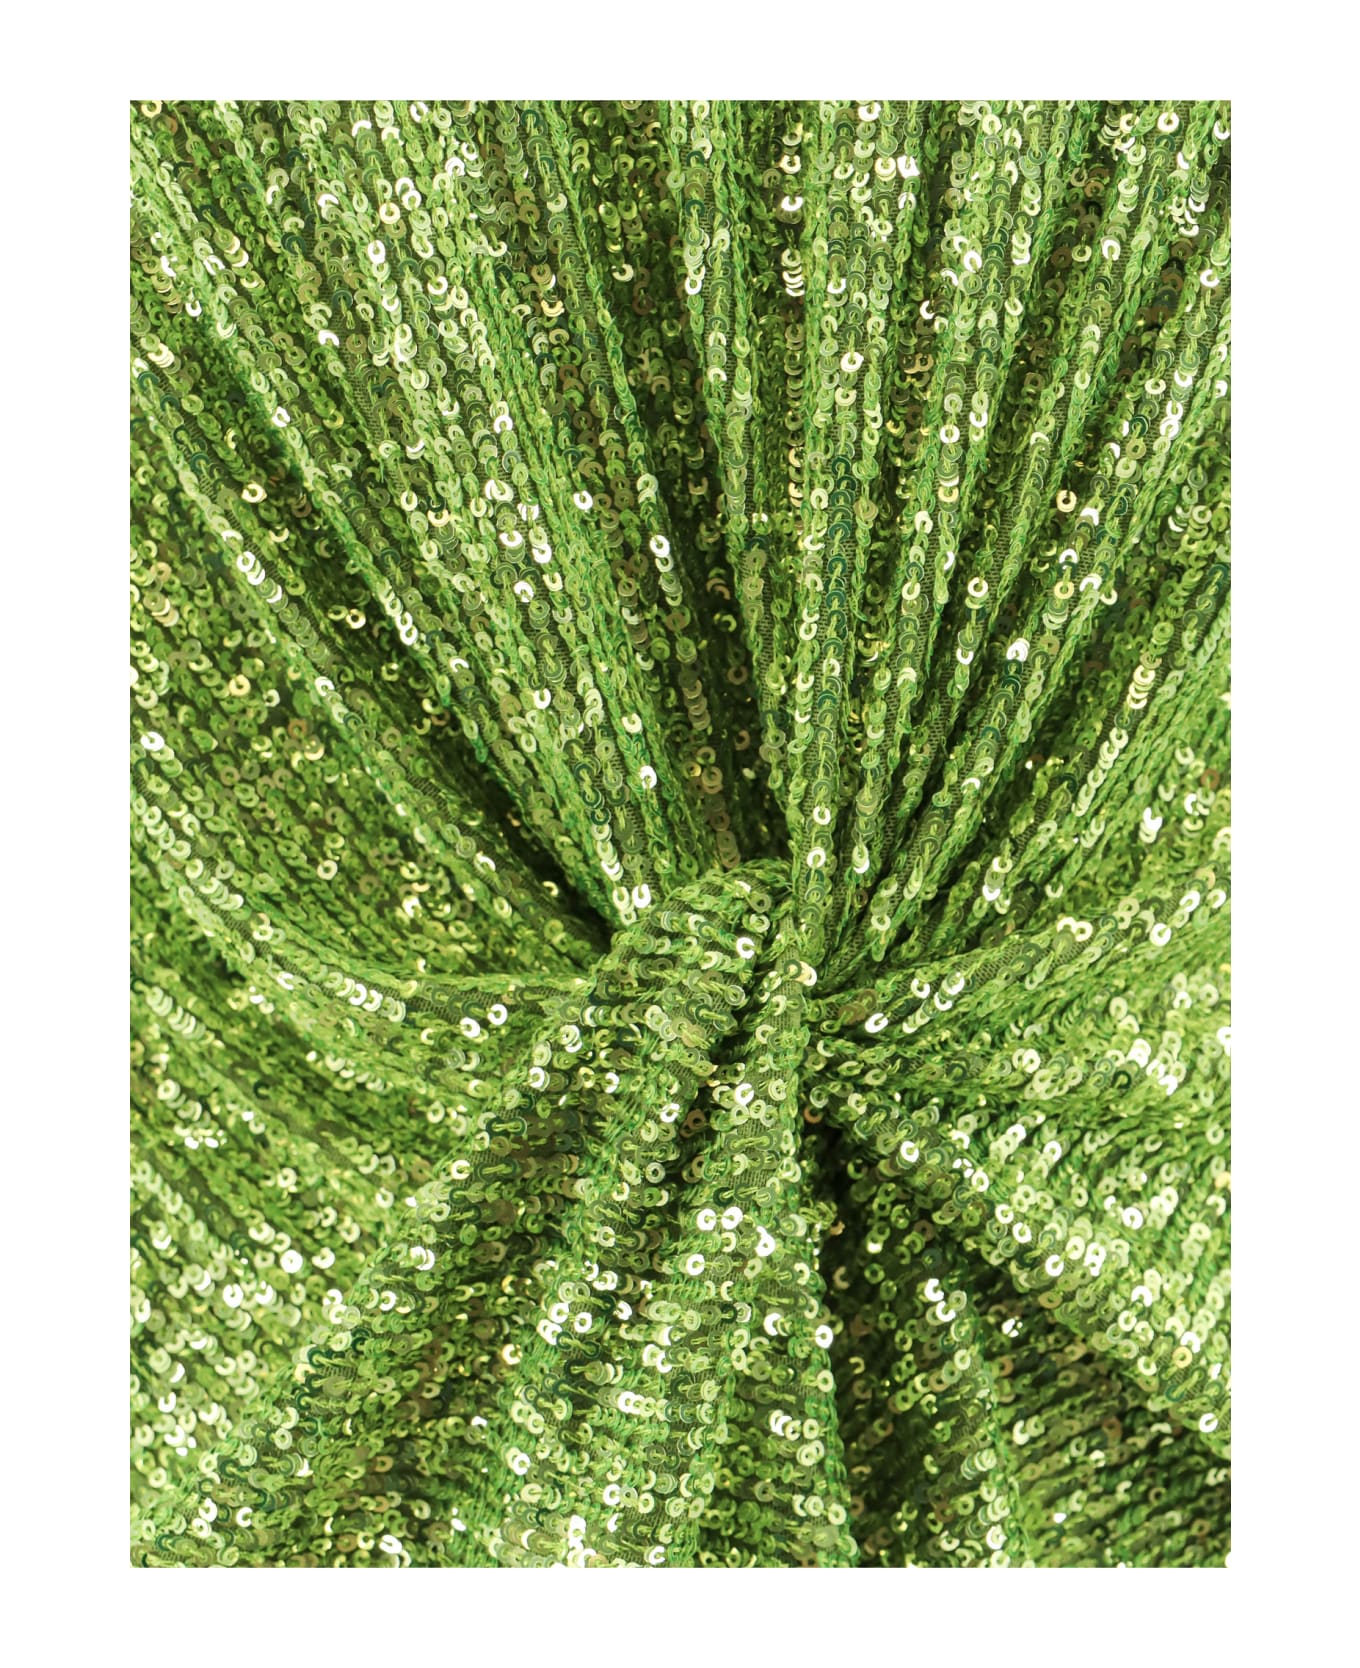 Nervi Crystal Dress - Green